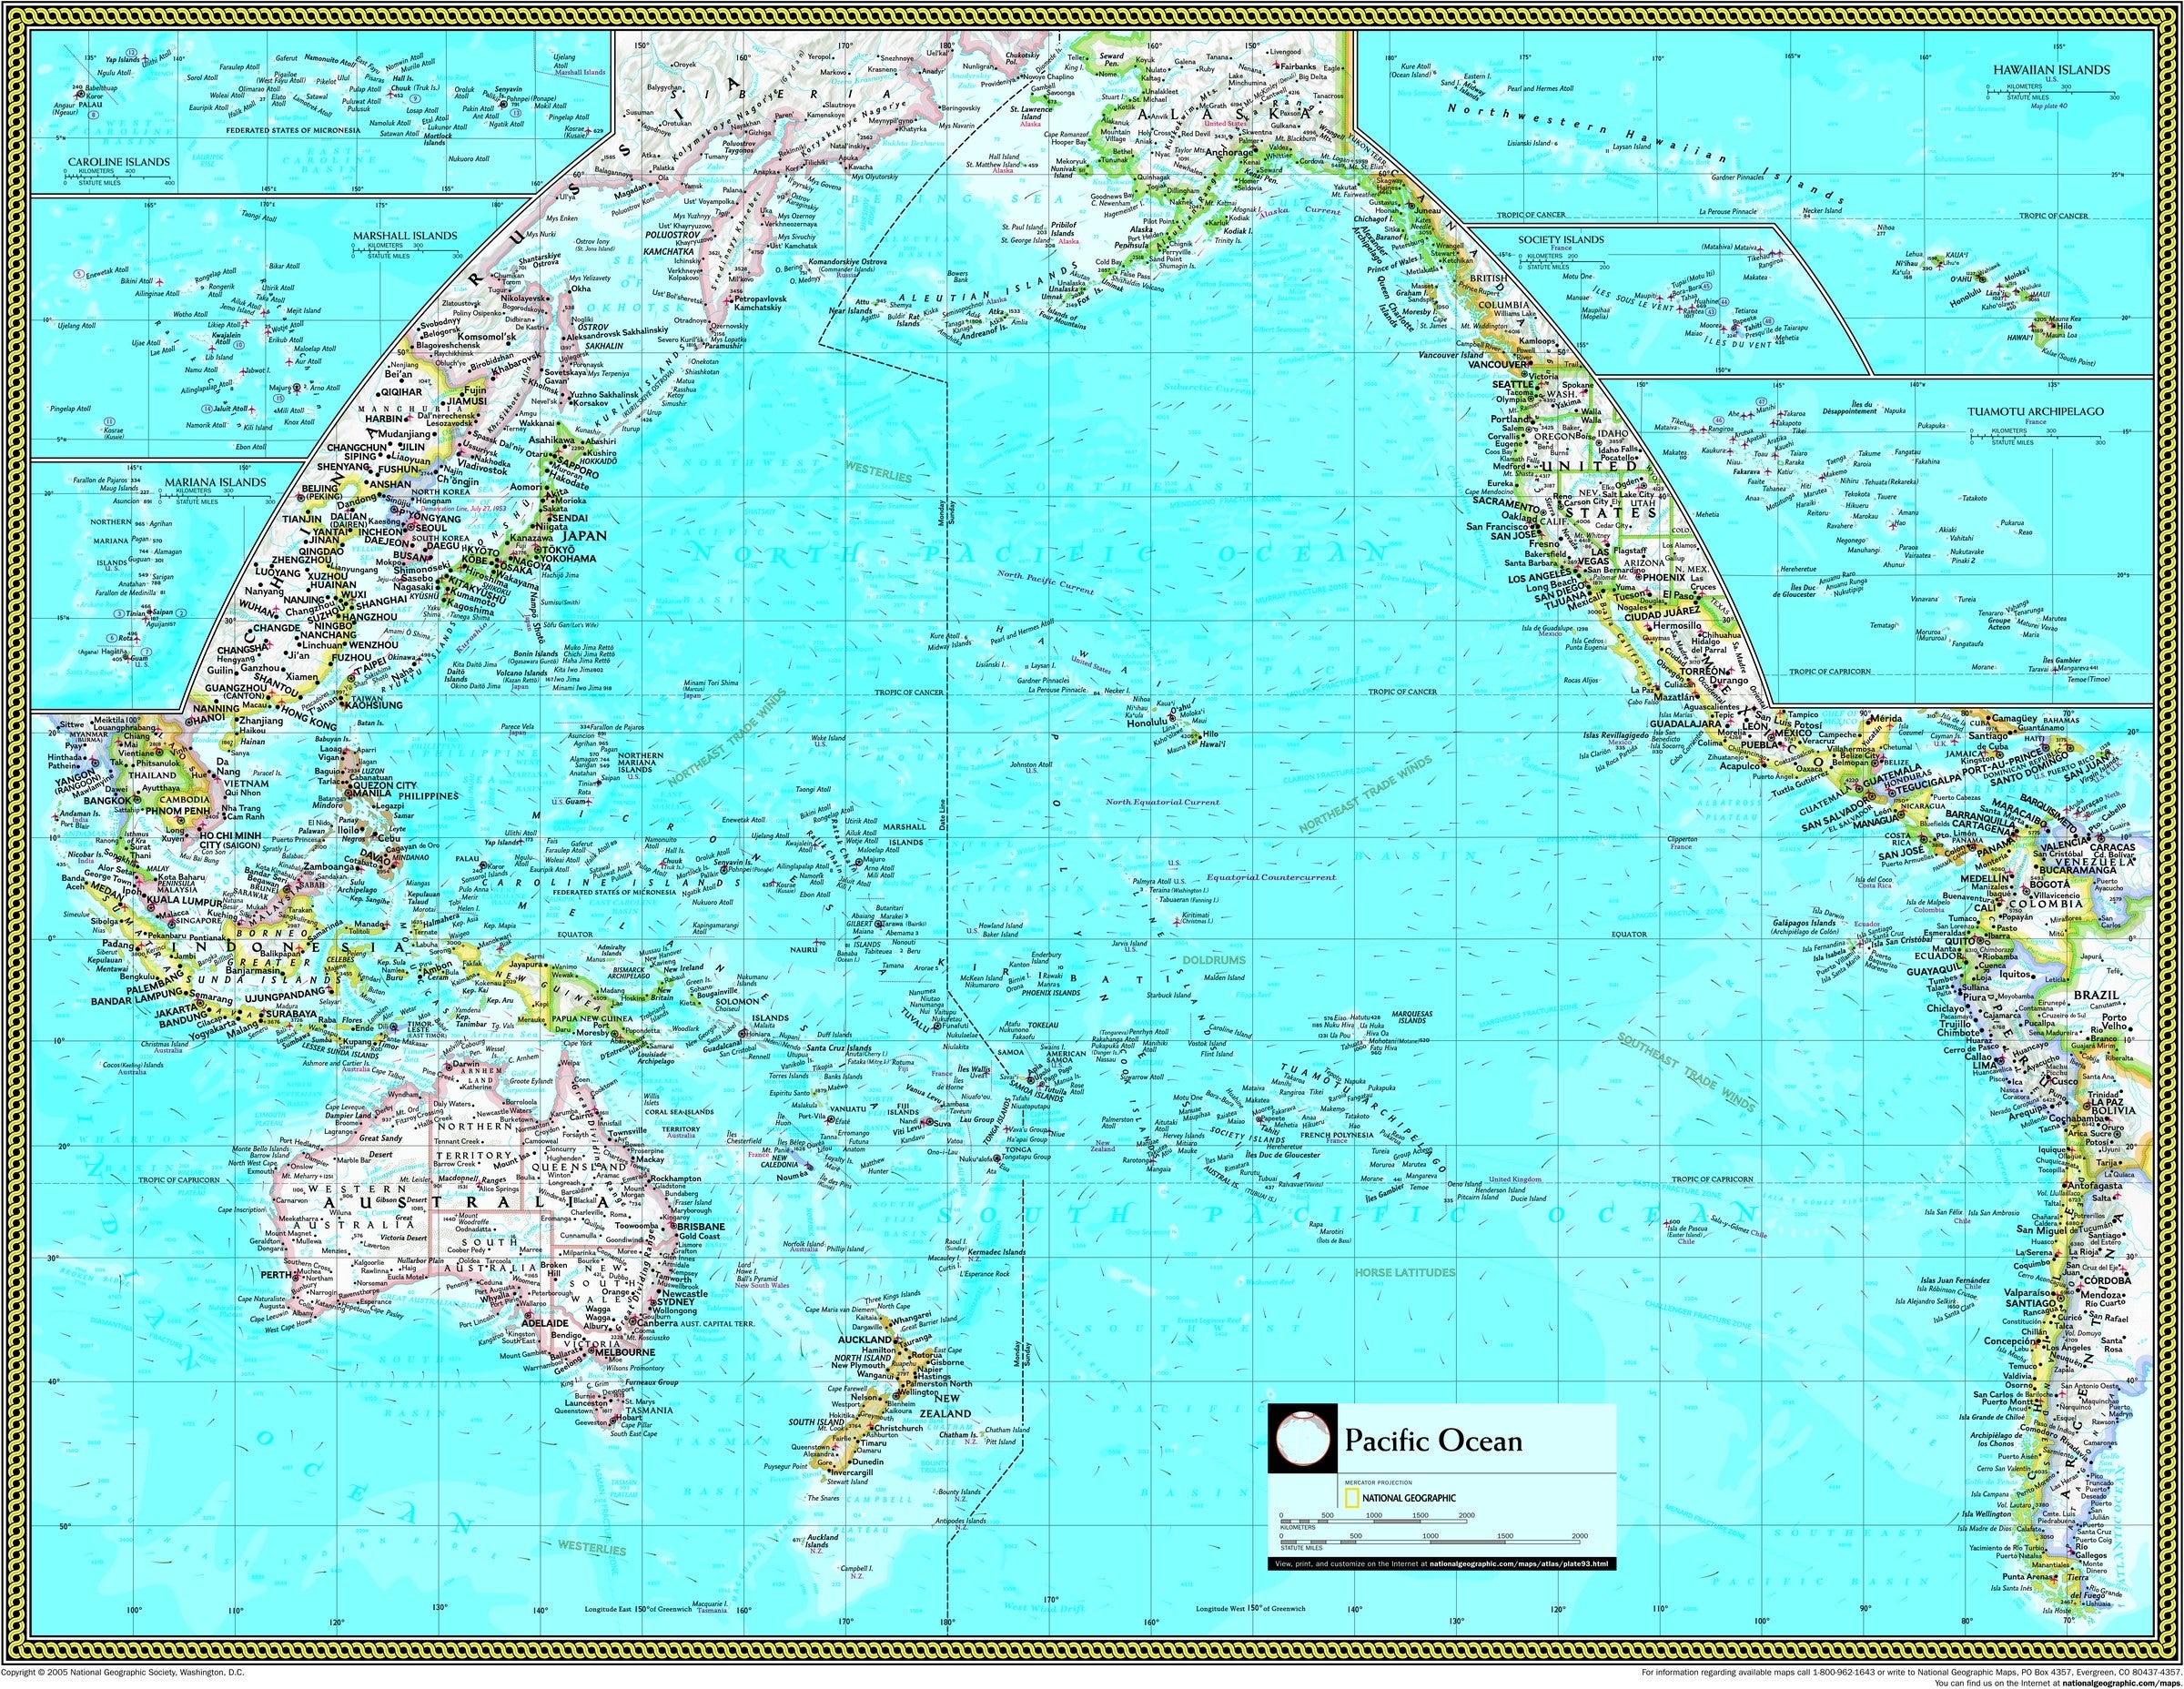 Pacific Ocean Political Atlas Wall Map | Maps.com.com